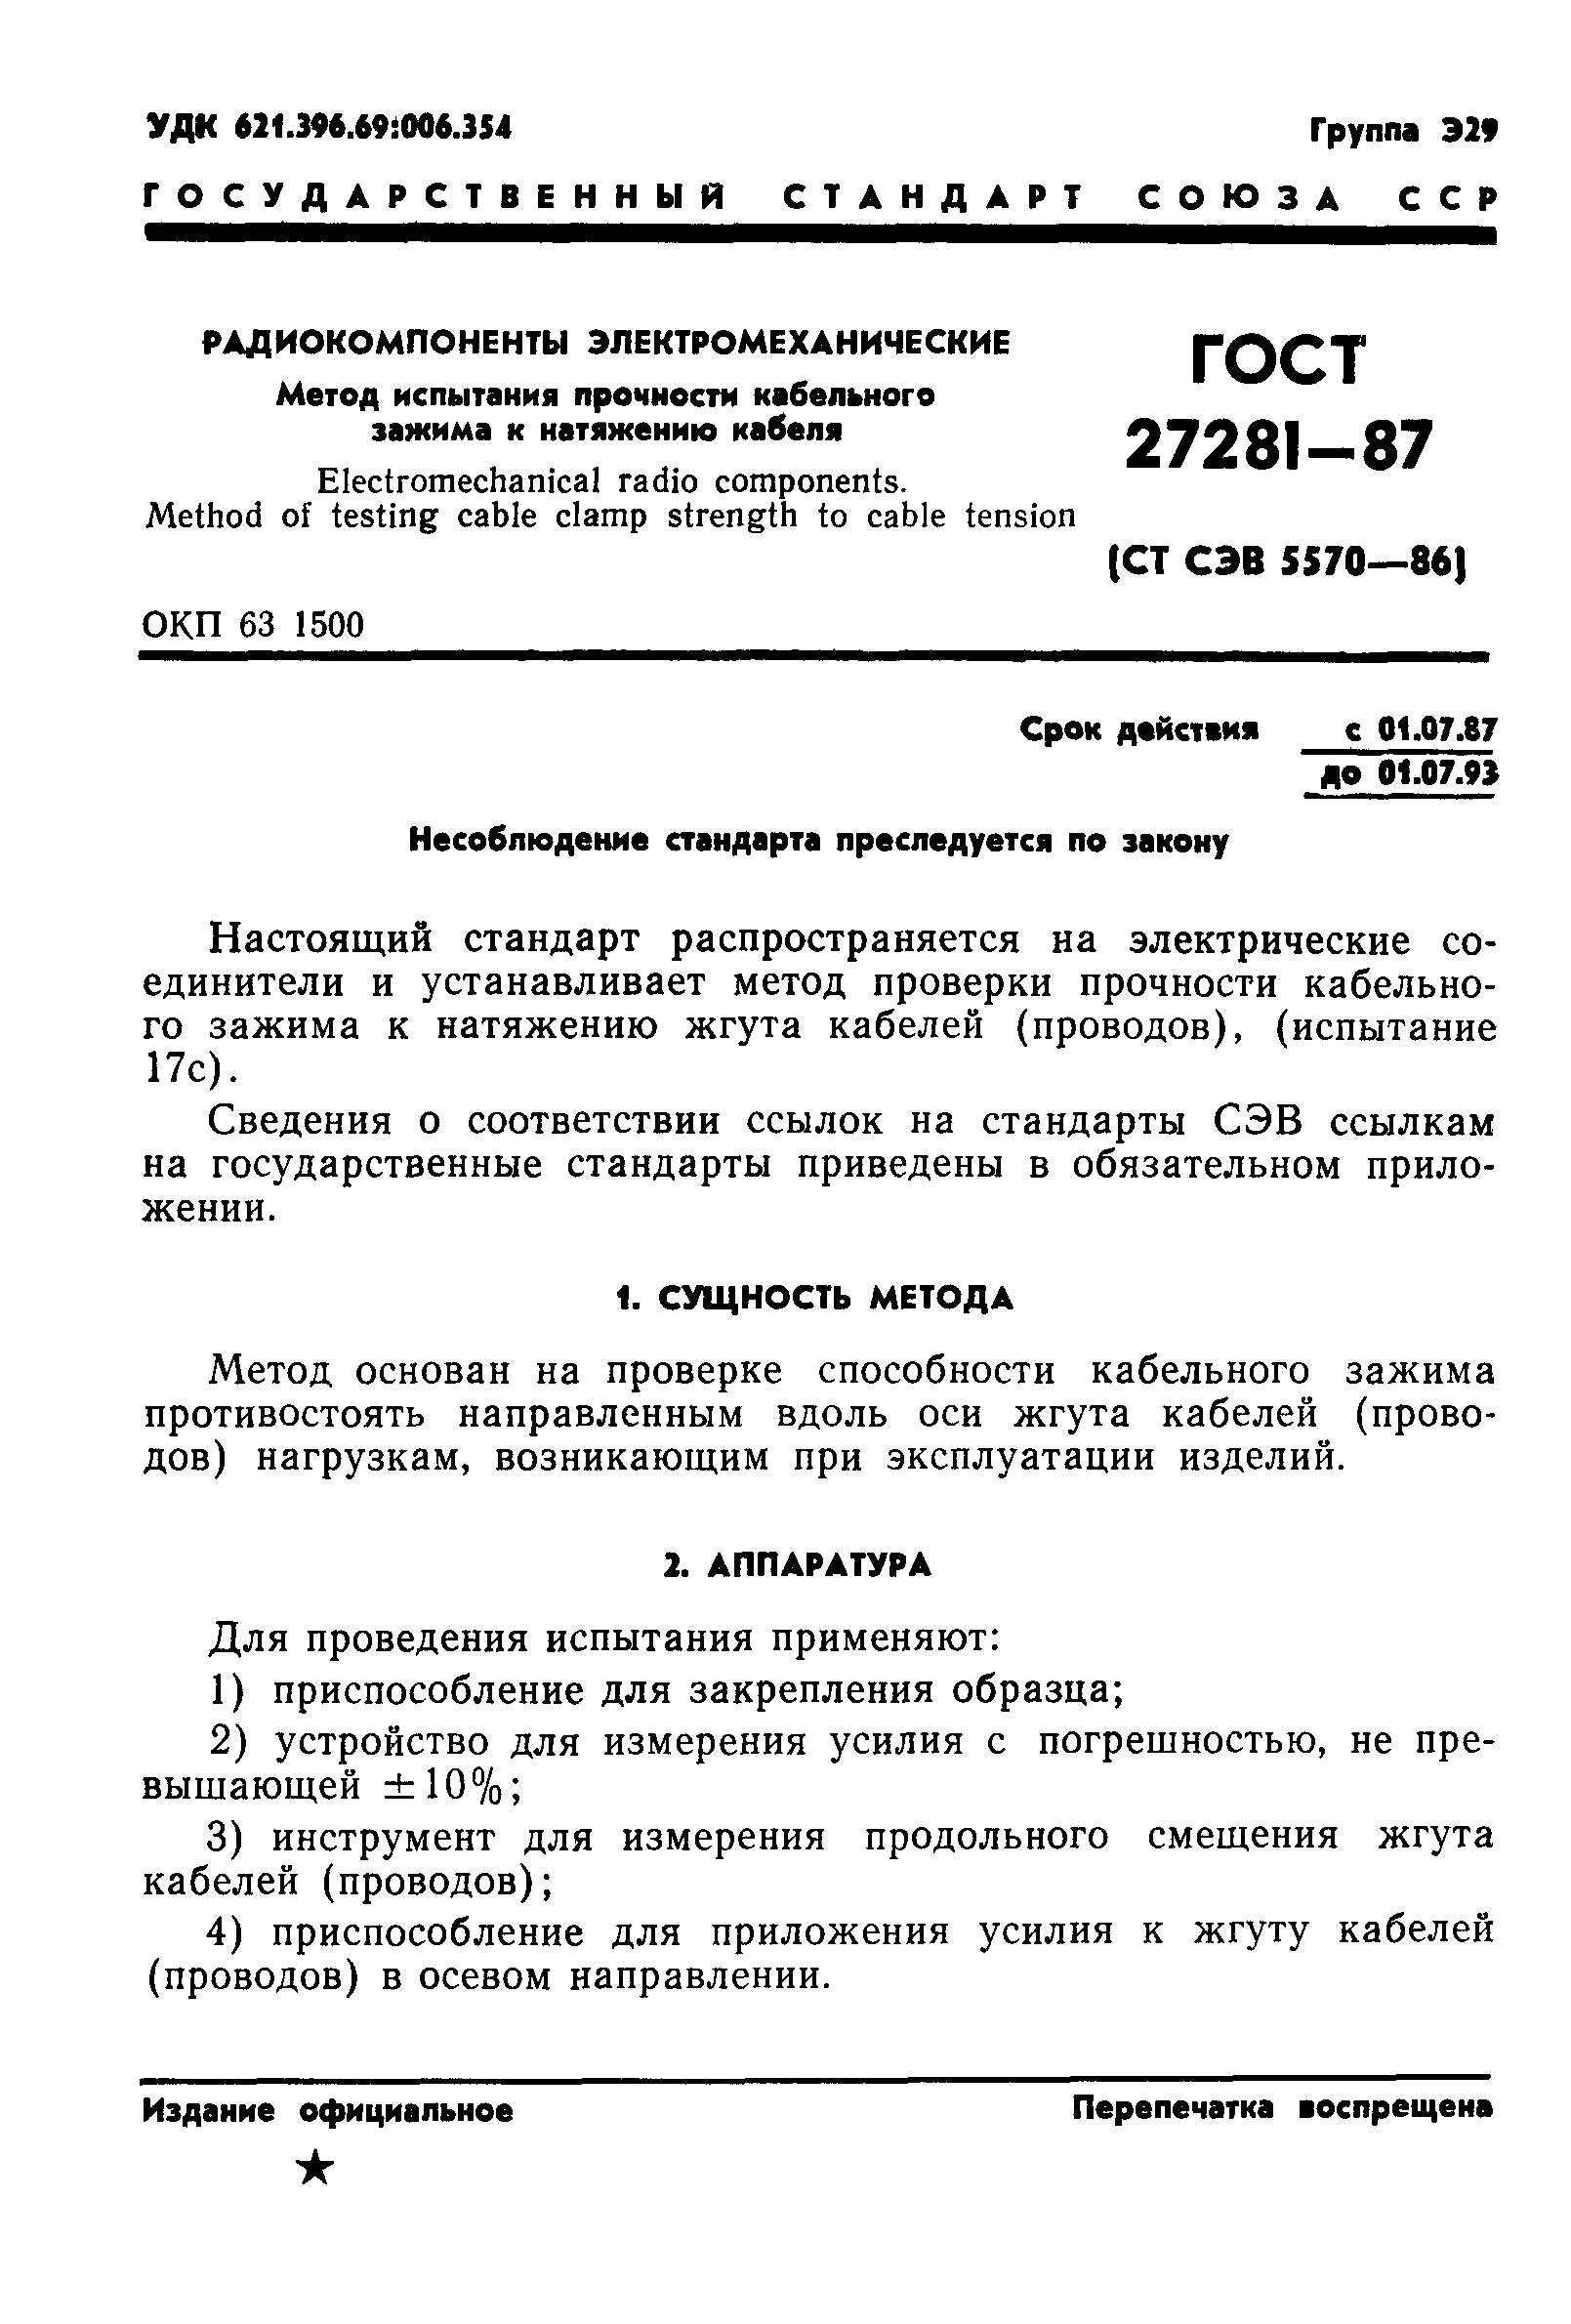 ГОСТ 27281-87